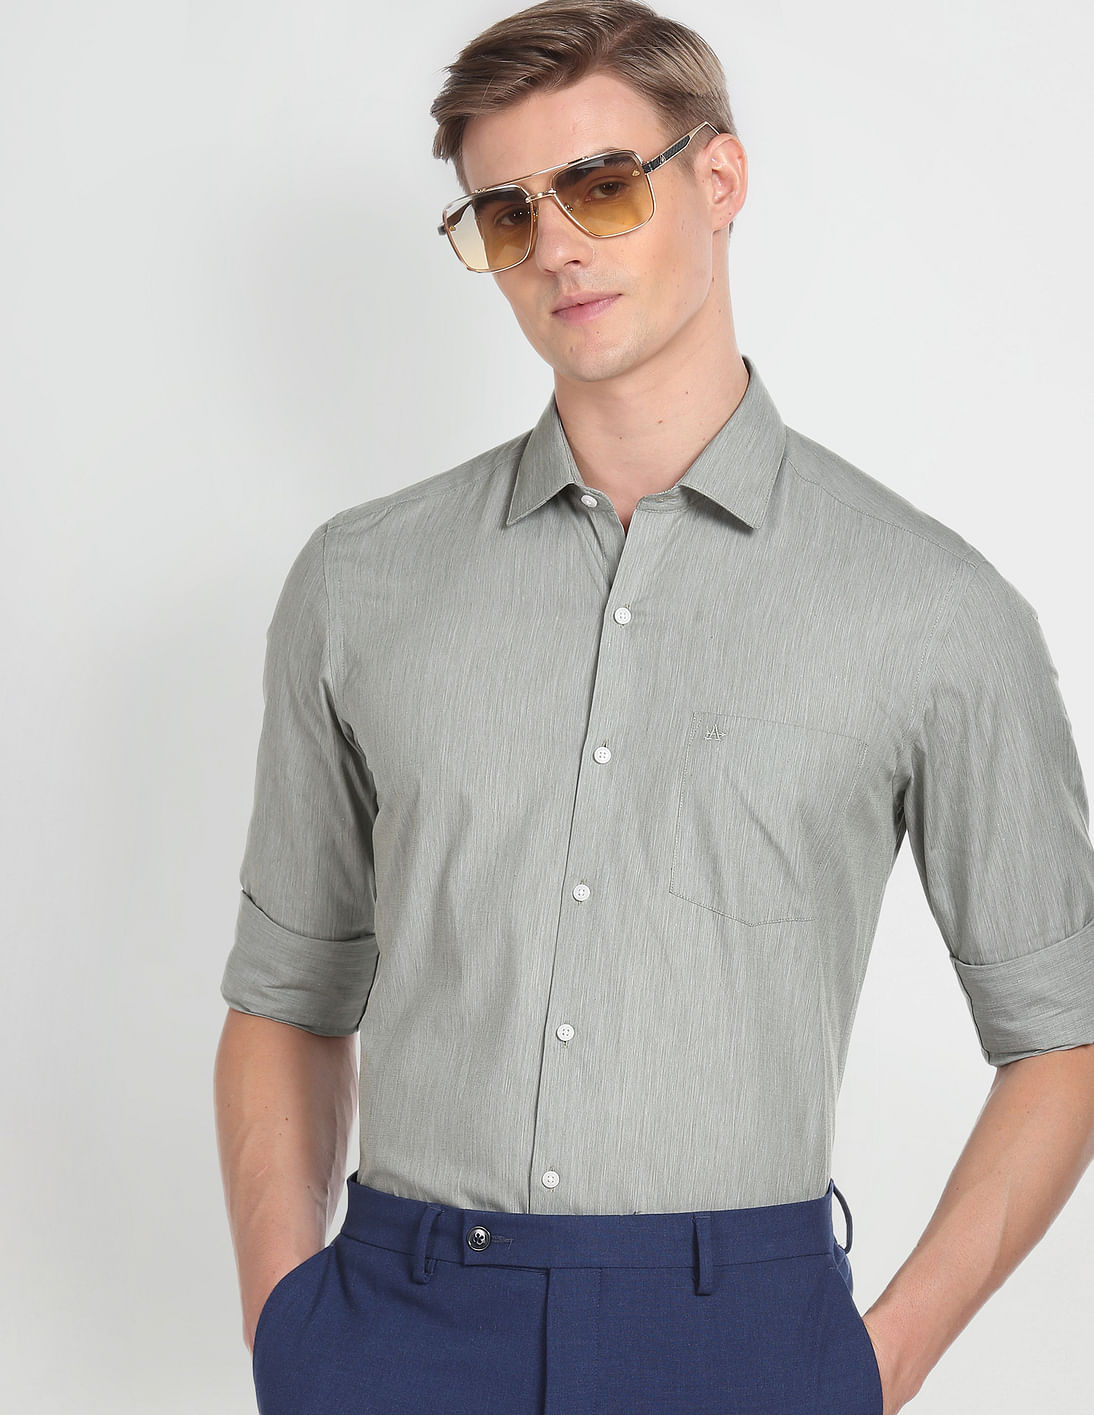 Buy Arrow Solid Manhattan Slim Fit Shirt - NNNOW.com